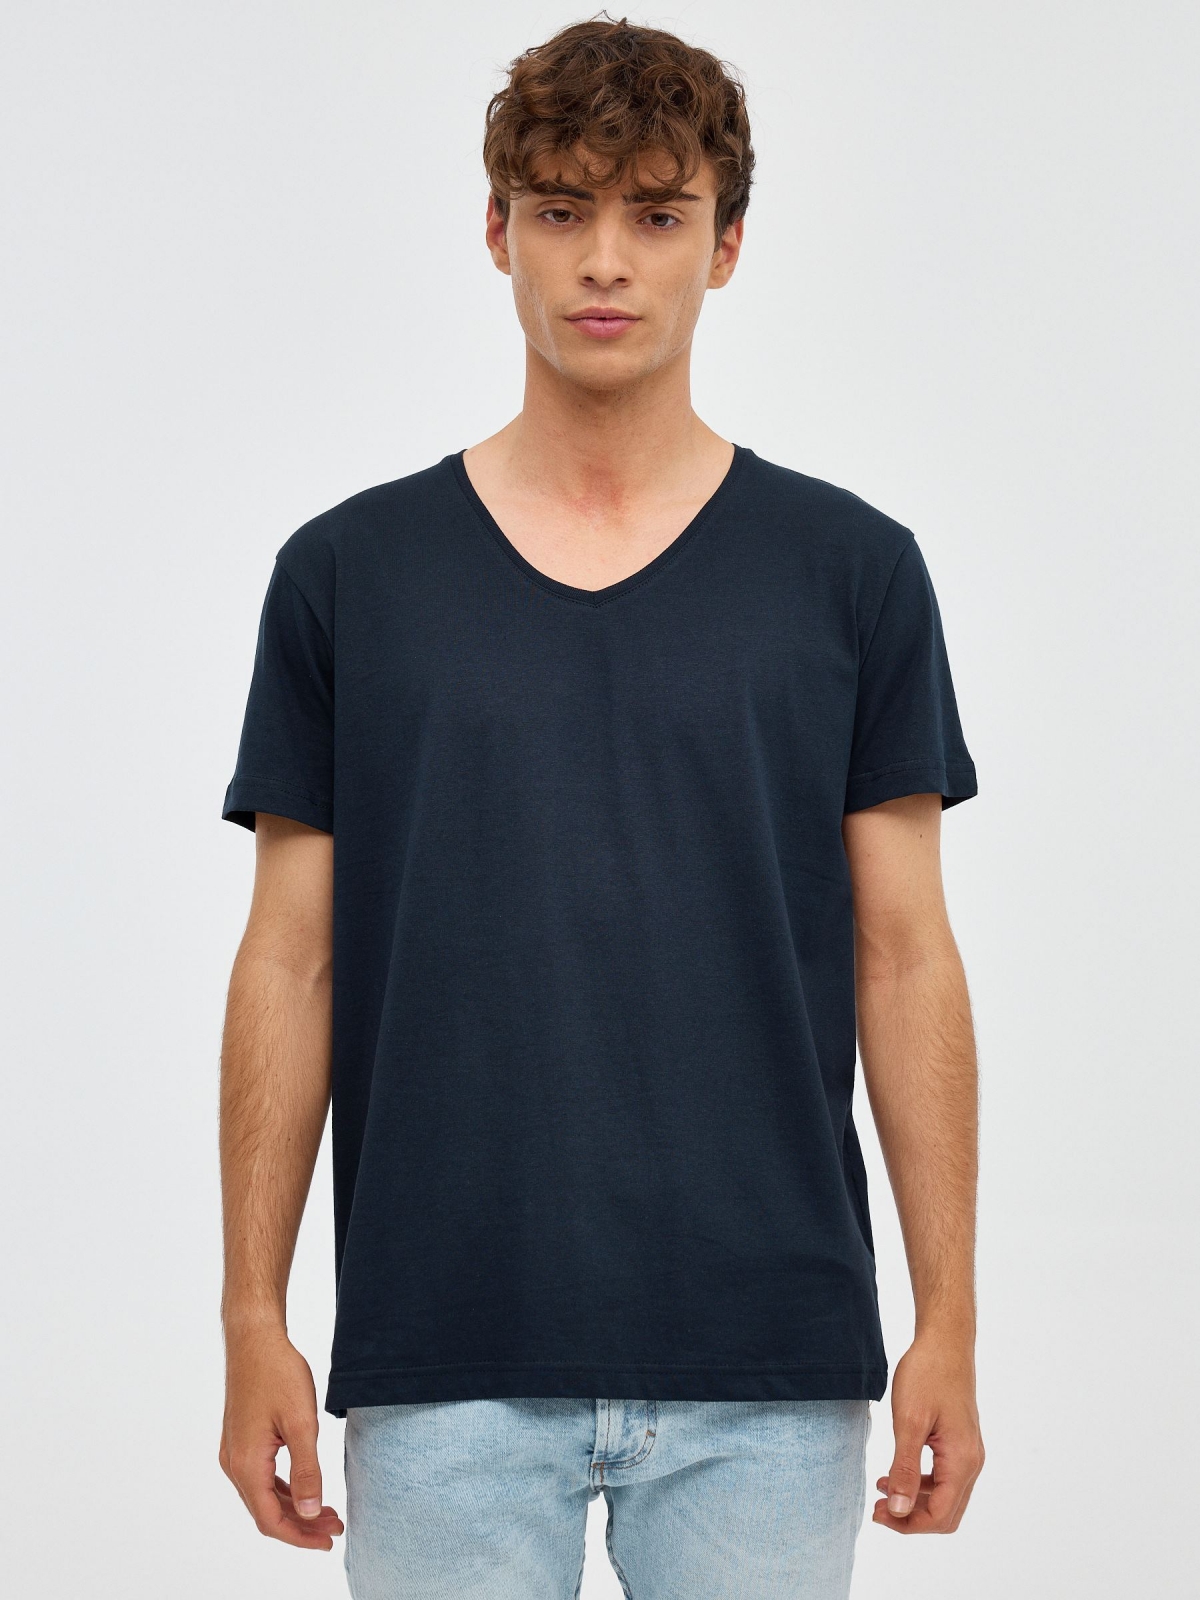 Basic V-neck T-shirt blue middle front view